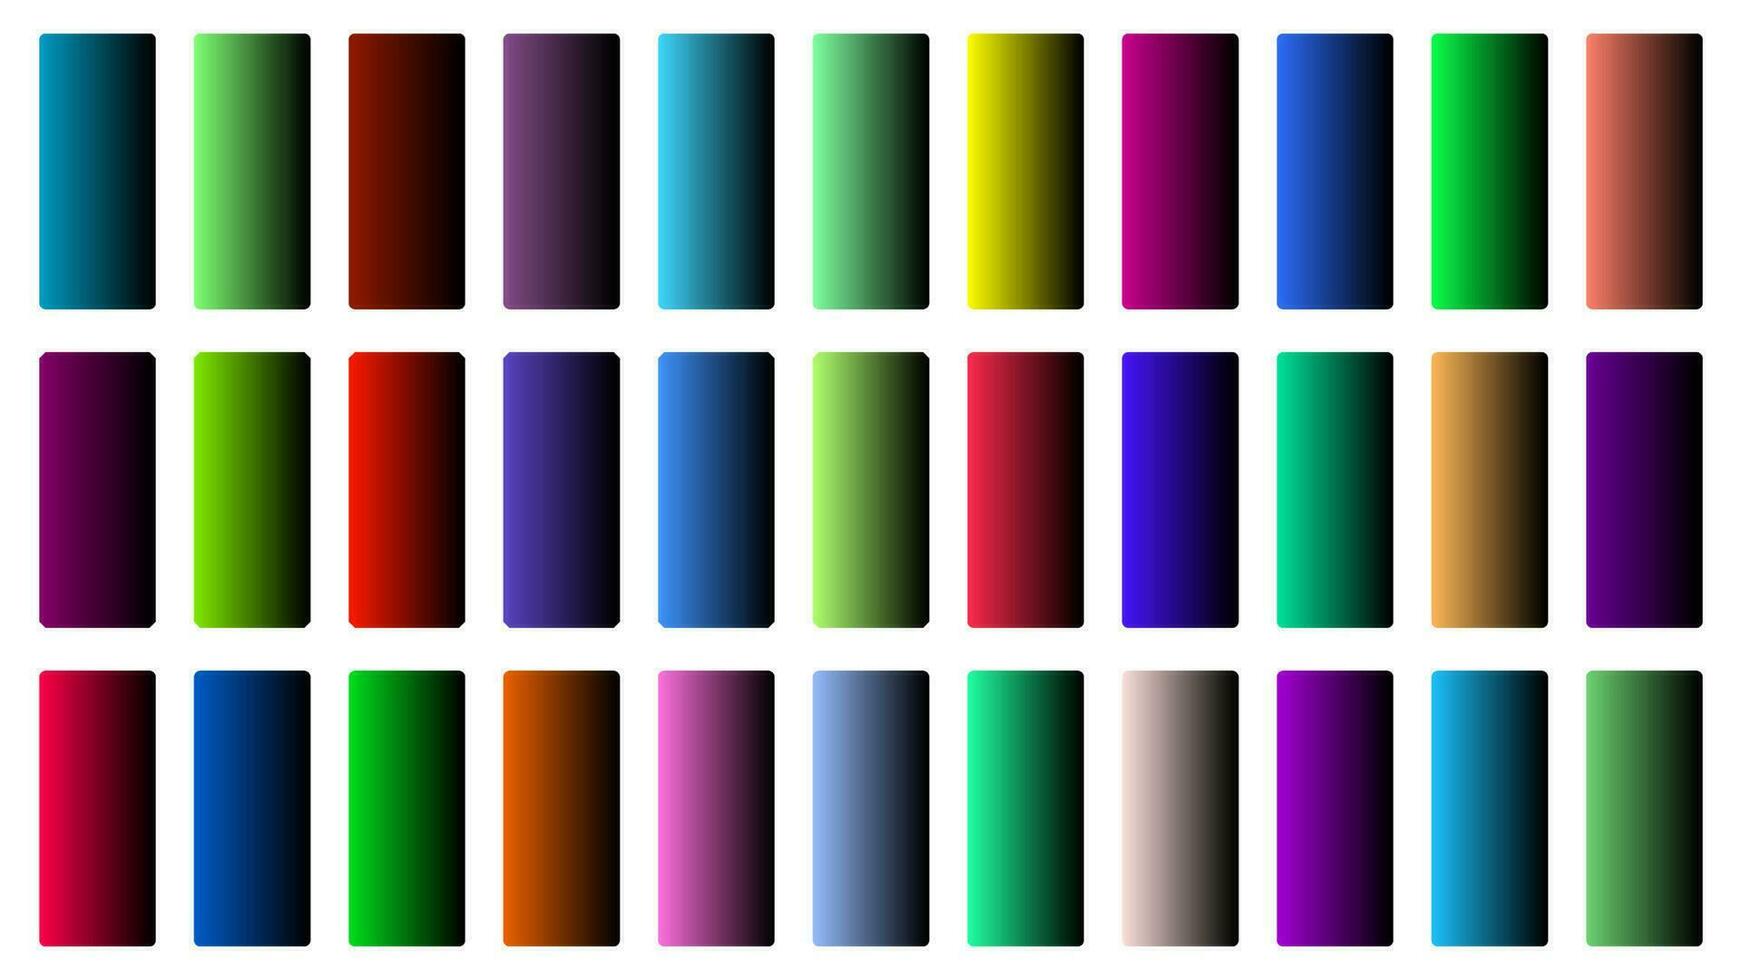 colorida Preto cor sombra linear gradiente paleta amostras rede kit arredondado retângulos modelo conjunto vetor